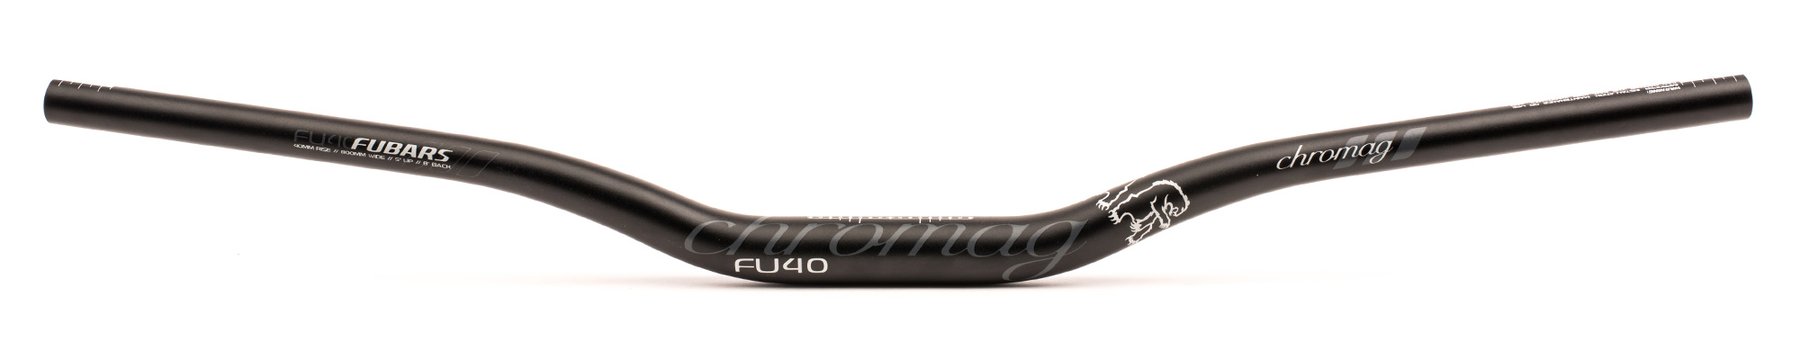 Picture of CHROMAG Fubars FU40 Rizer Bar 31.8 MTB Handlebar - 800mm - black